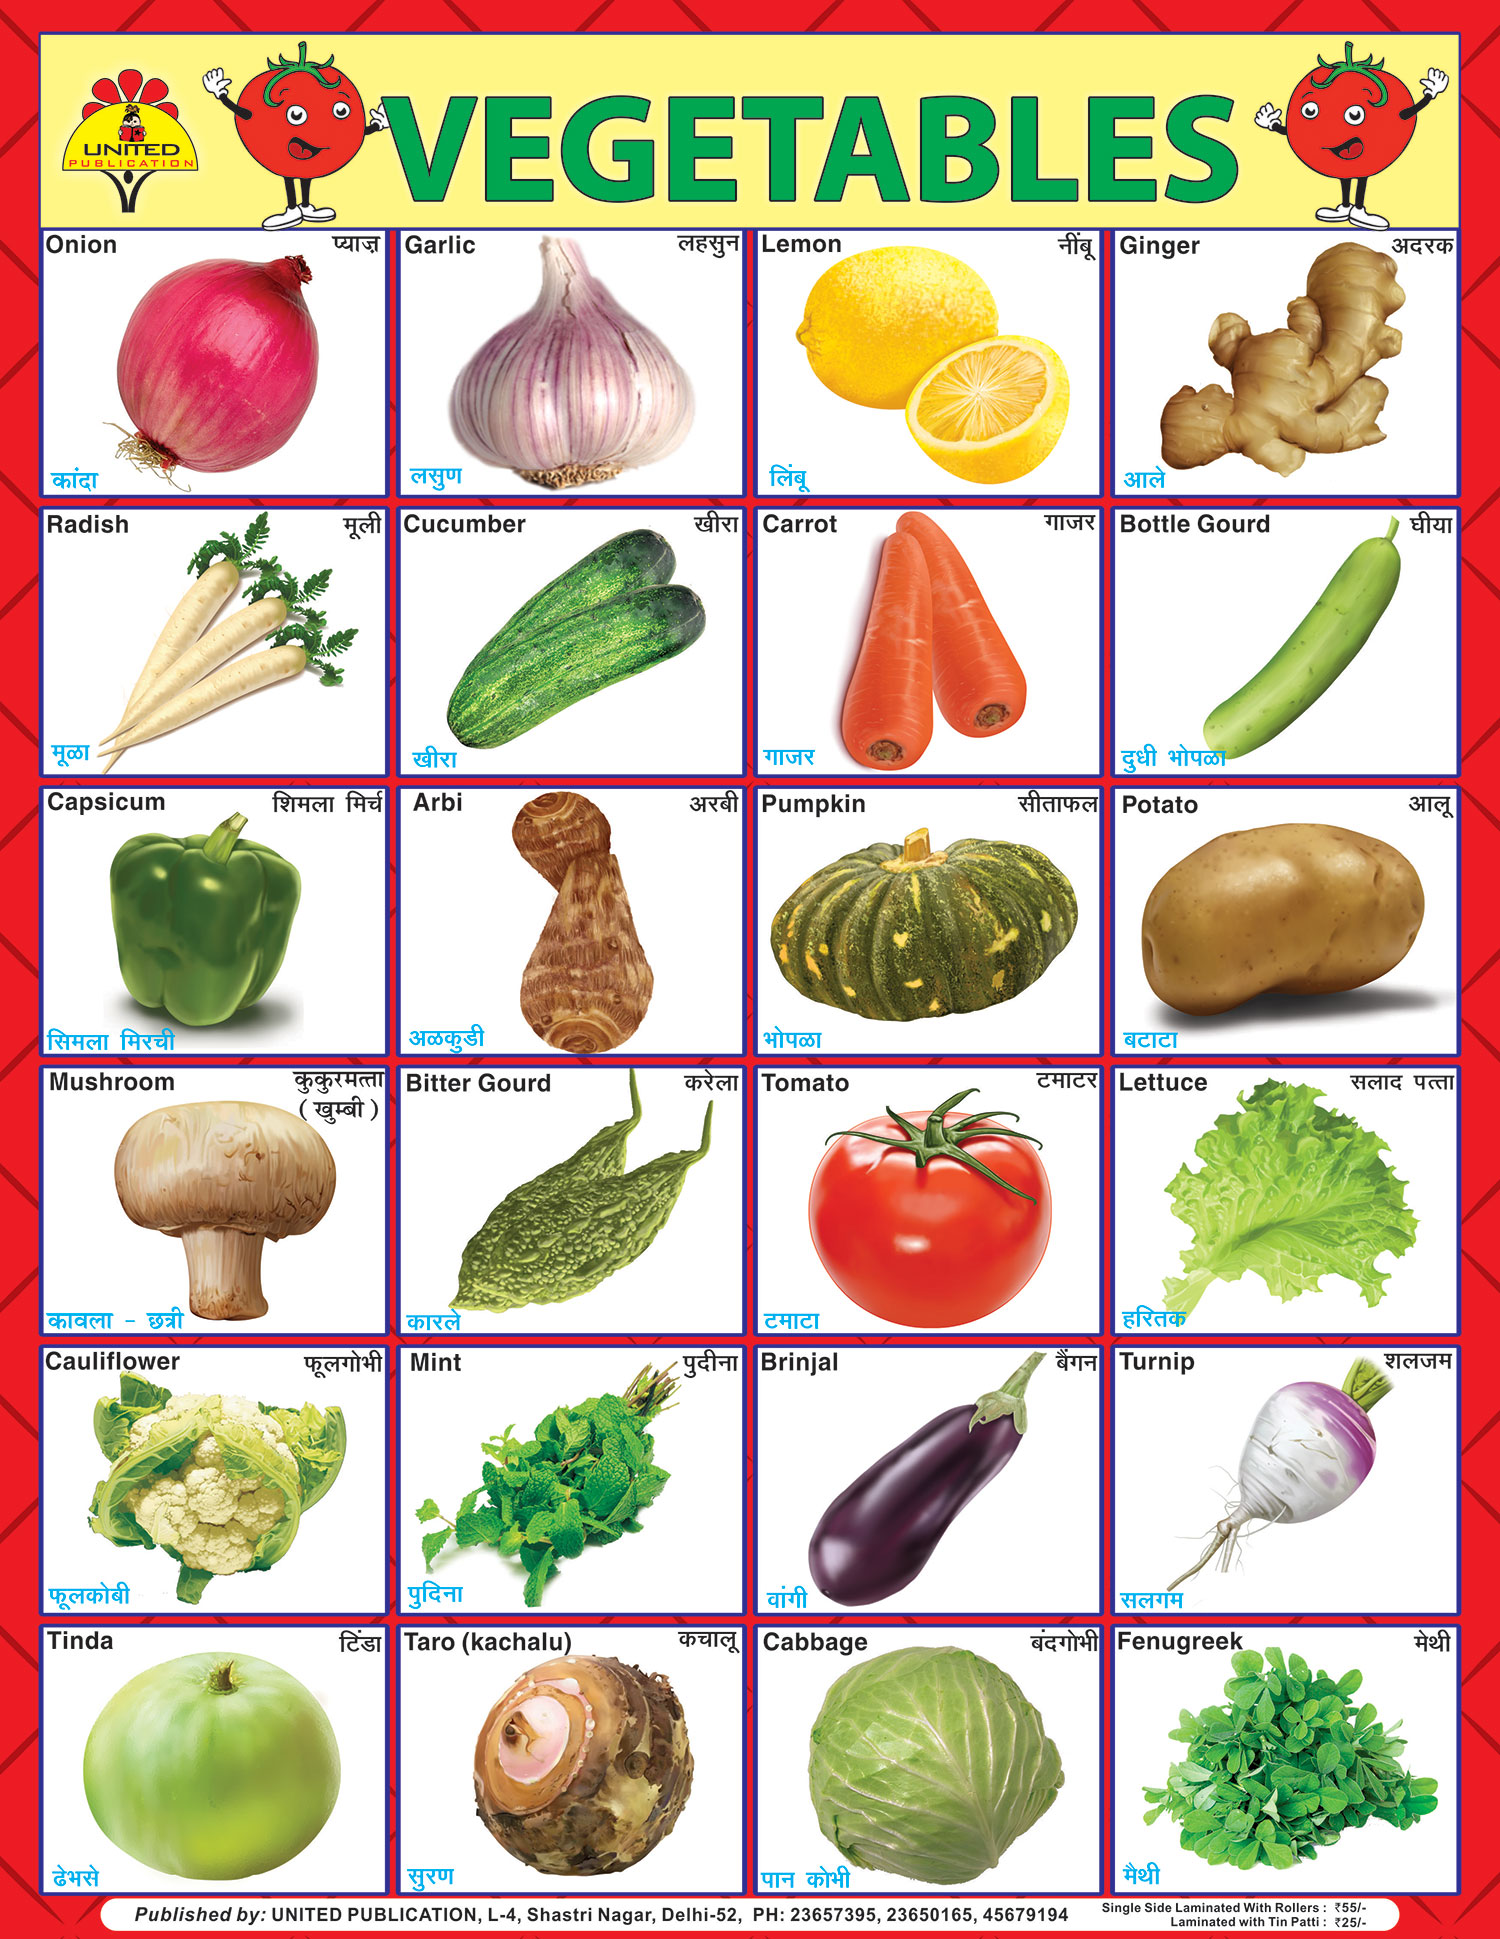 Vegetables list. Овощи названия. Карточки овощи для детей. Овощи на английском для детей. Овощи названия овощей.